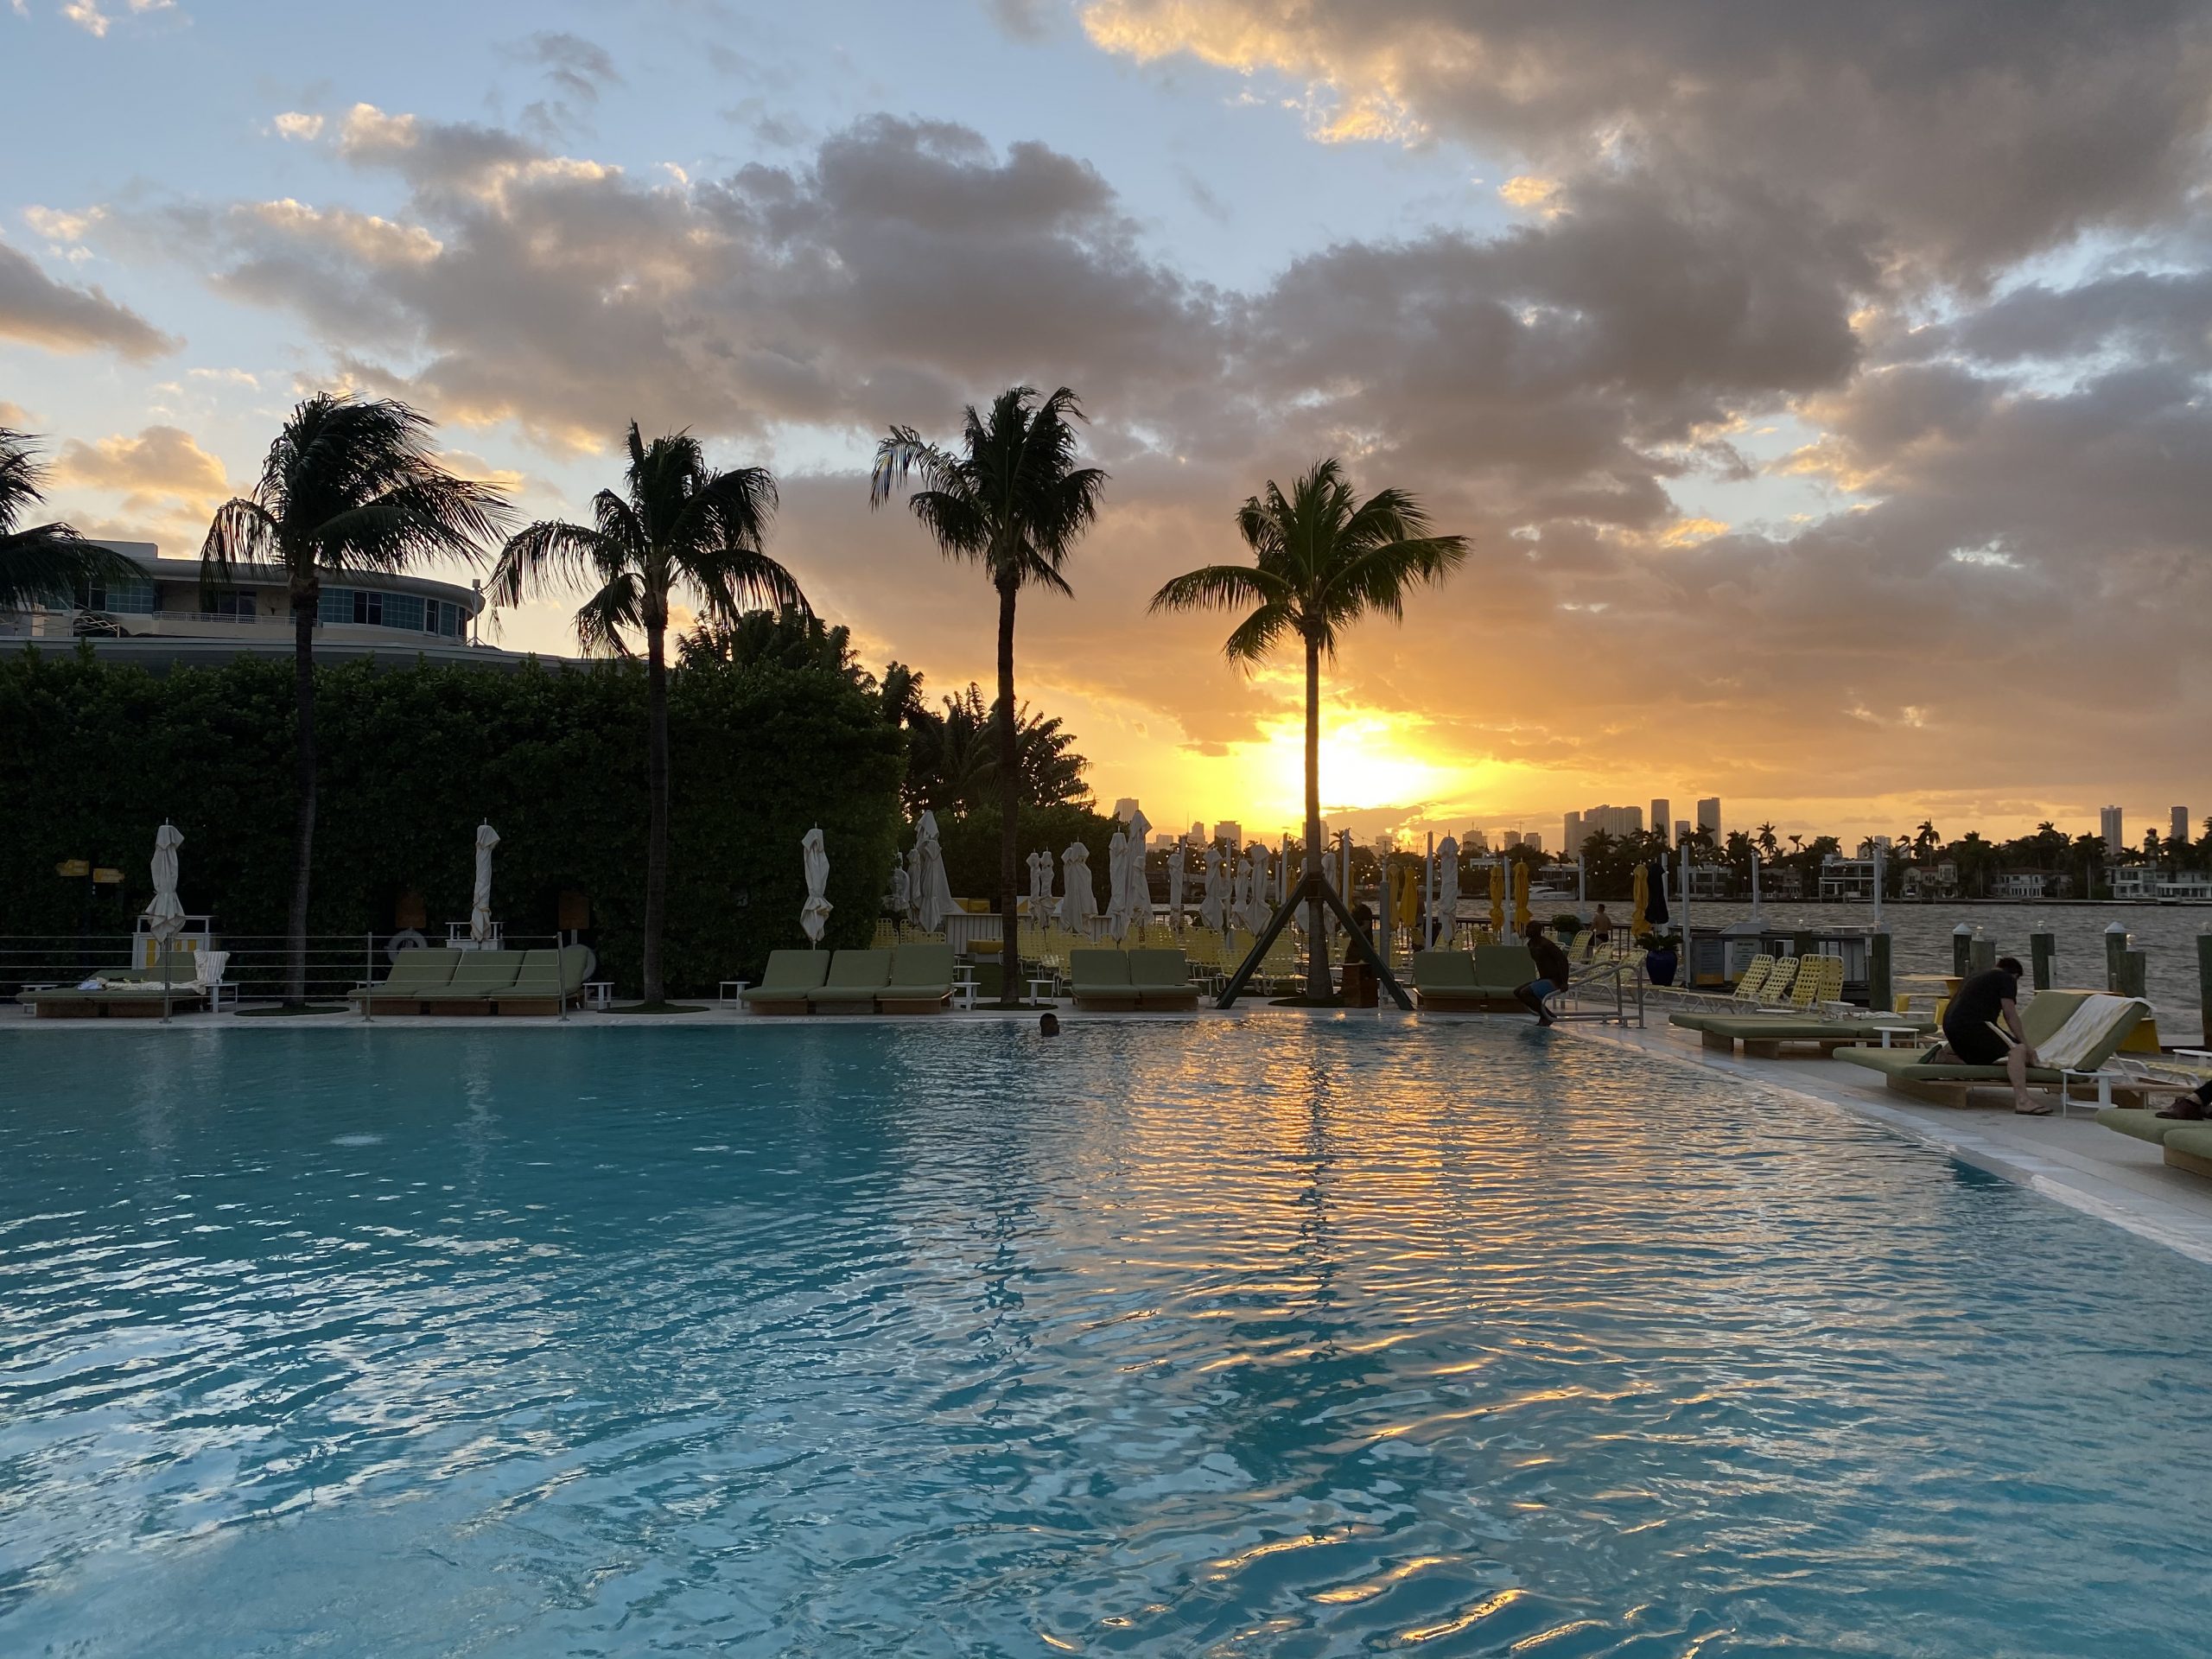 The Standard Hotel Spa Miami Beach Review ~ Lylitas pic